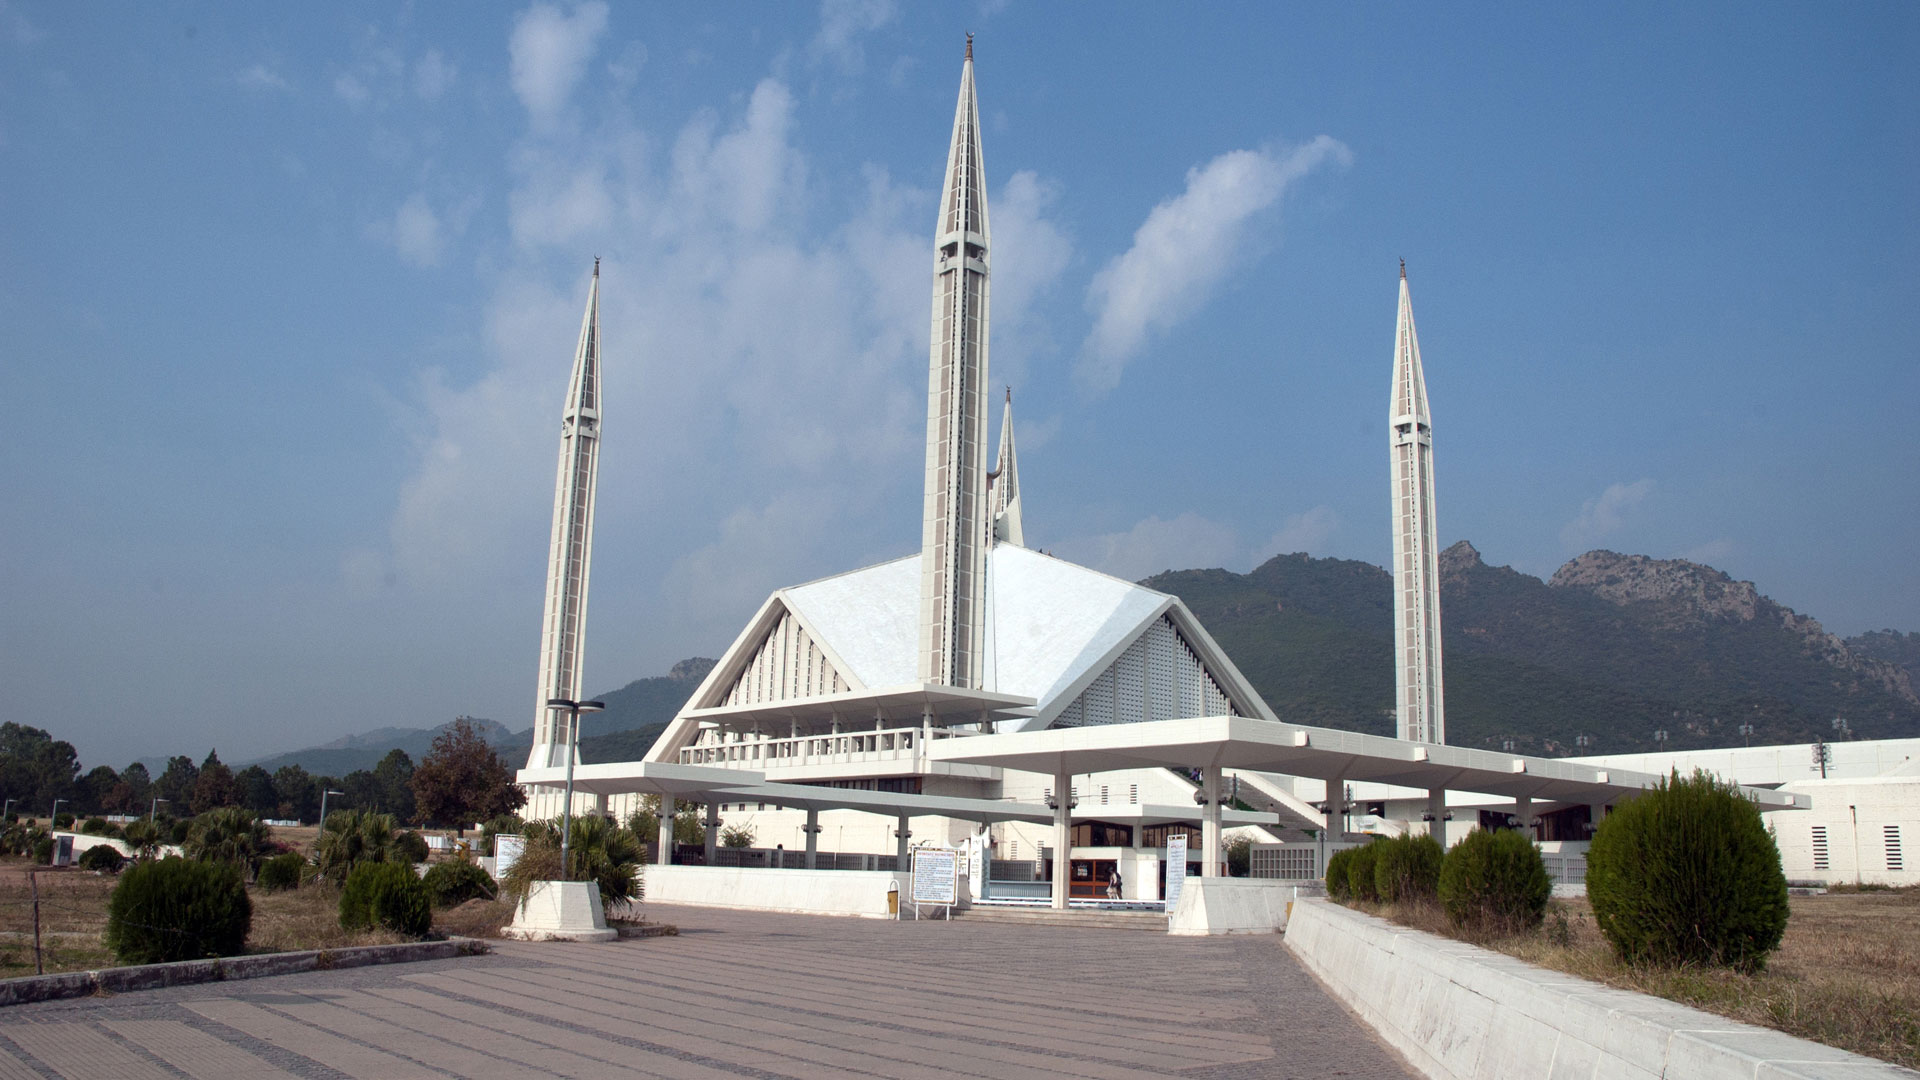 King Faisal Mosque by Turkish architect Vedat Dalokay in Islamabad, Islamabad Capital Territory, Pakistan